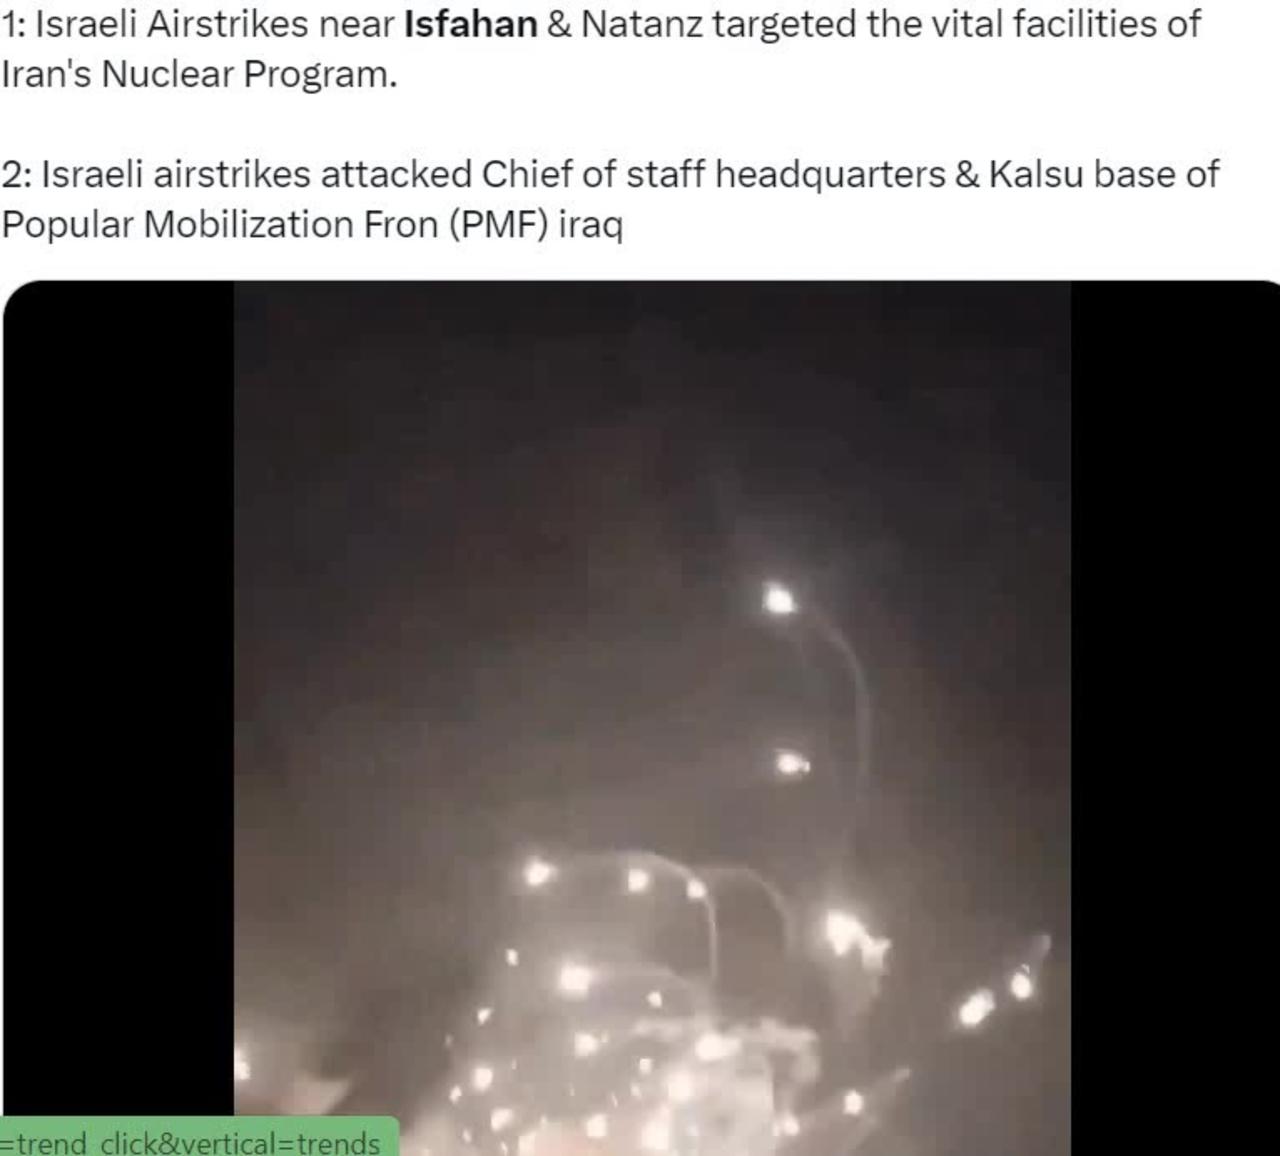 Israeli Airstrikes near Isfahan & Natanz targeted the vital facilities of Iran's Nuclear Program.